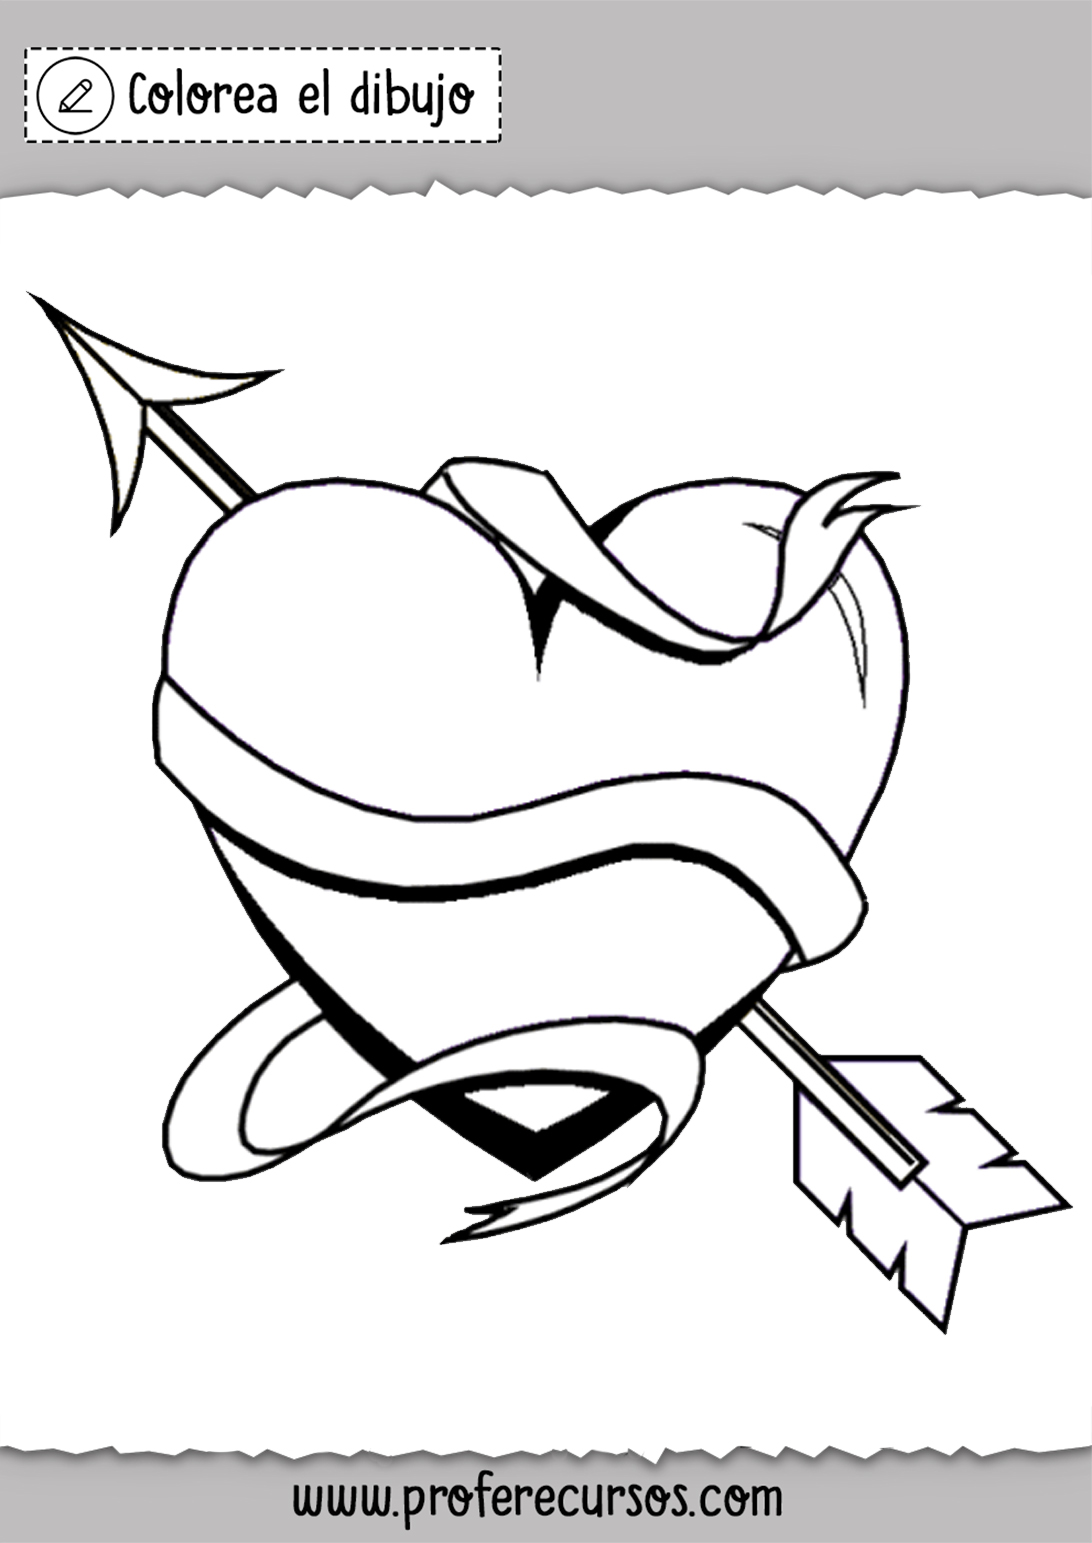 Dibujo Corazon con Flecha para colorear